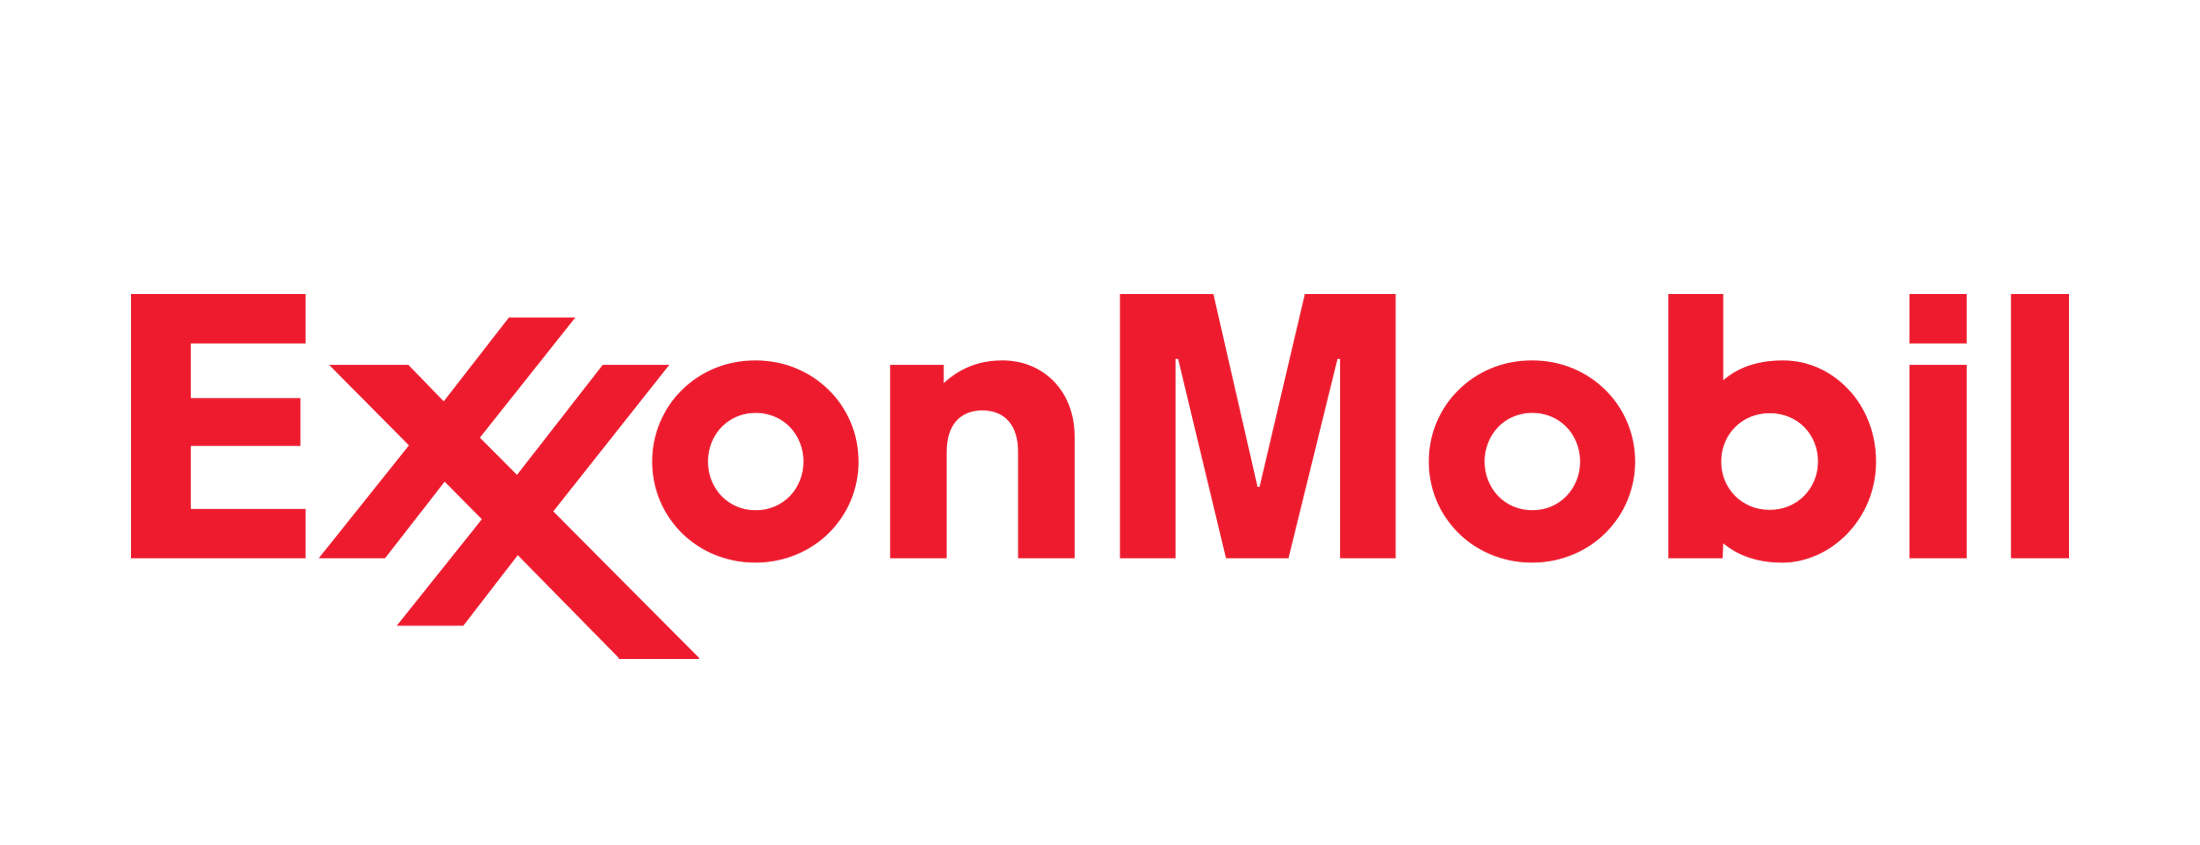 ExxonMobil Logo, ExxonMobil Symbol, Meaning, History and Evolution